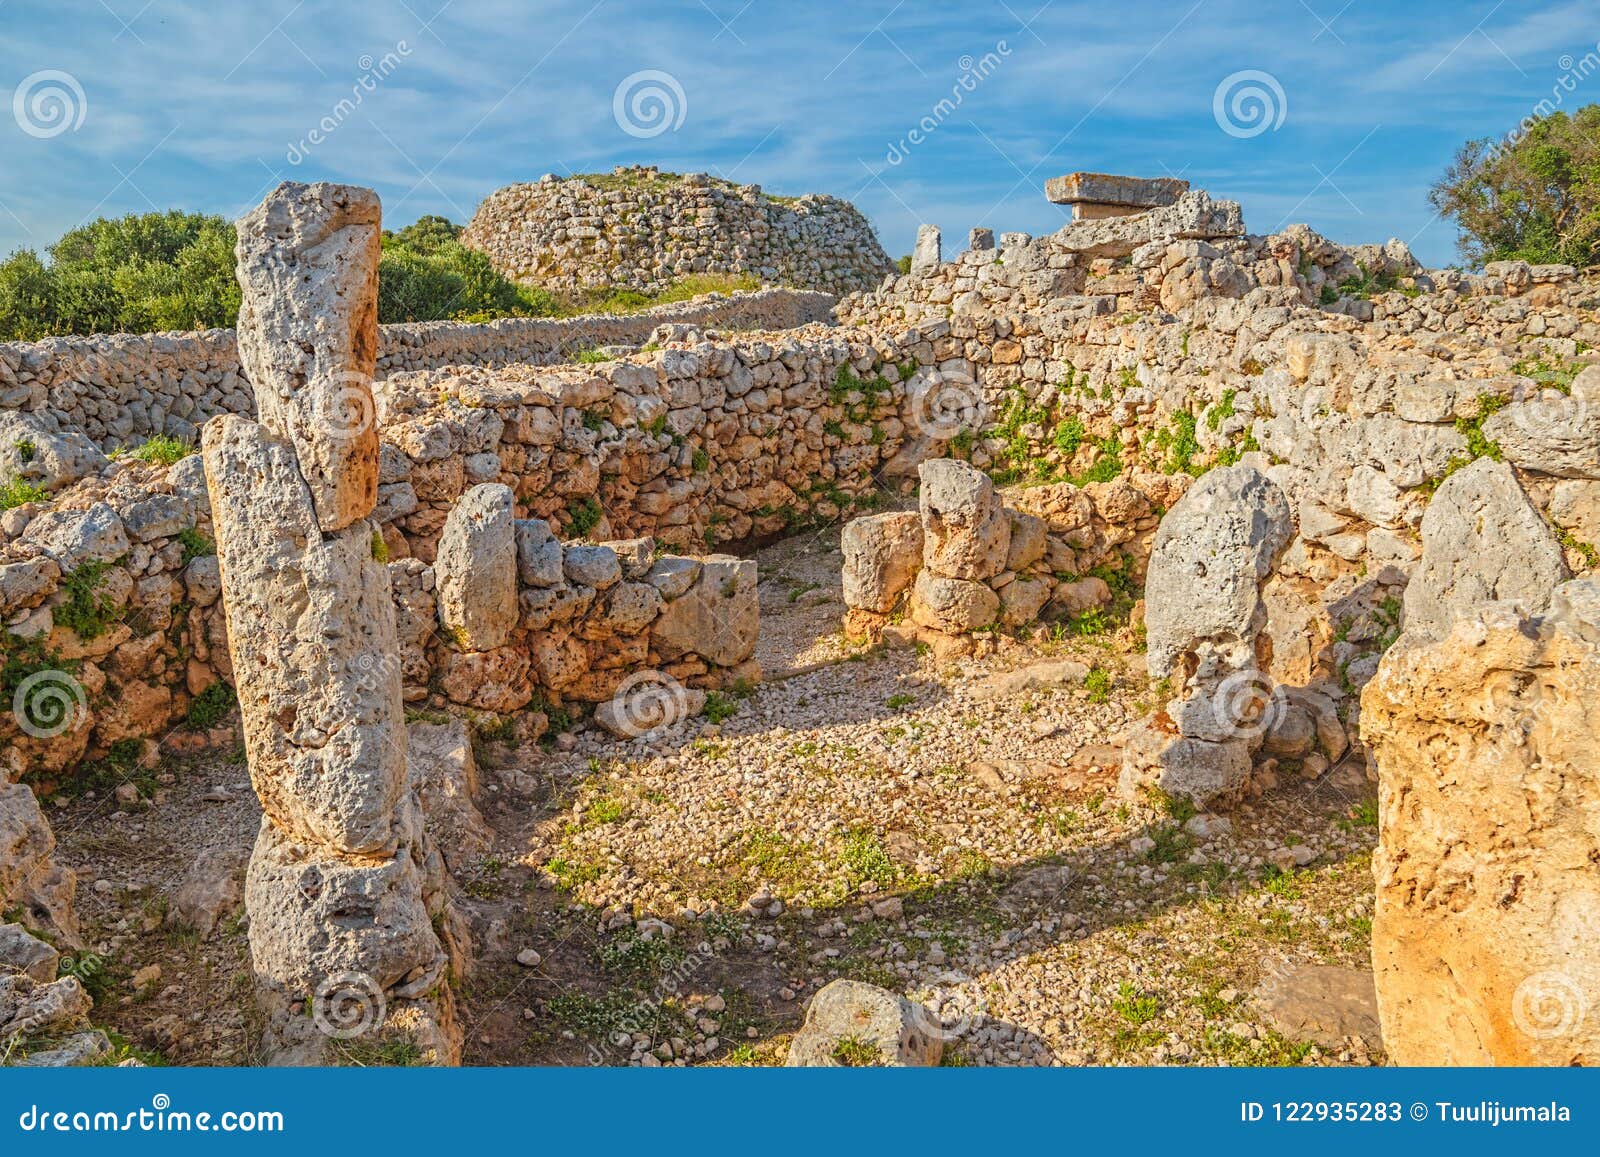 trepuco talaiotic village ruins at menorca island